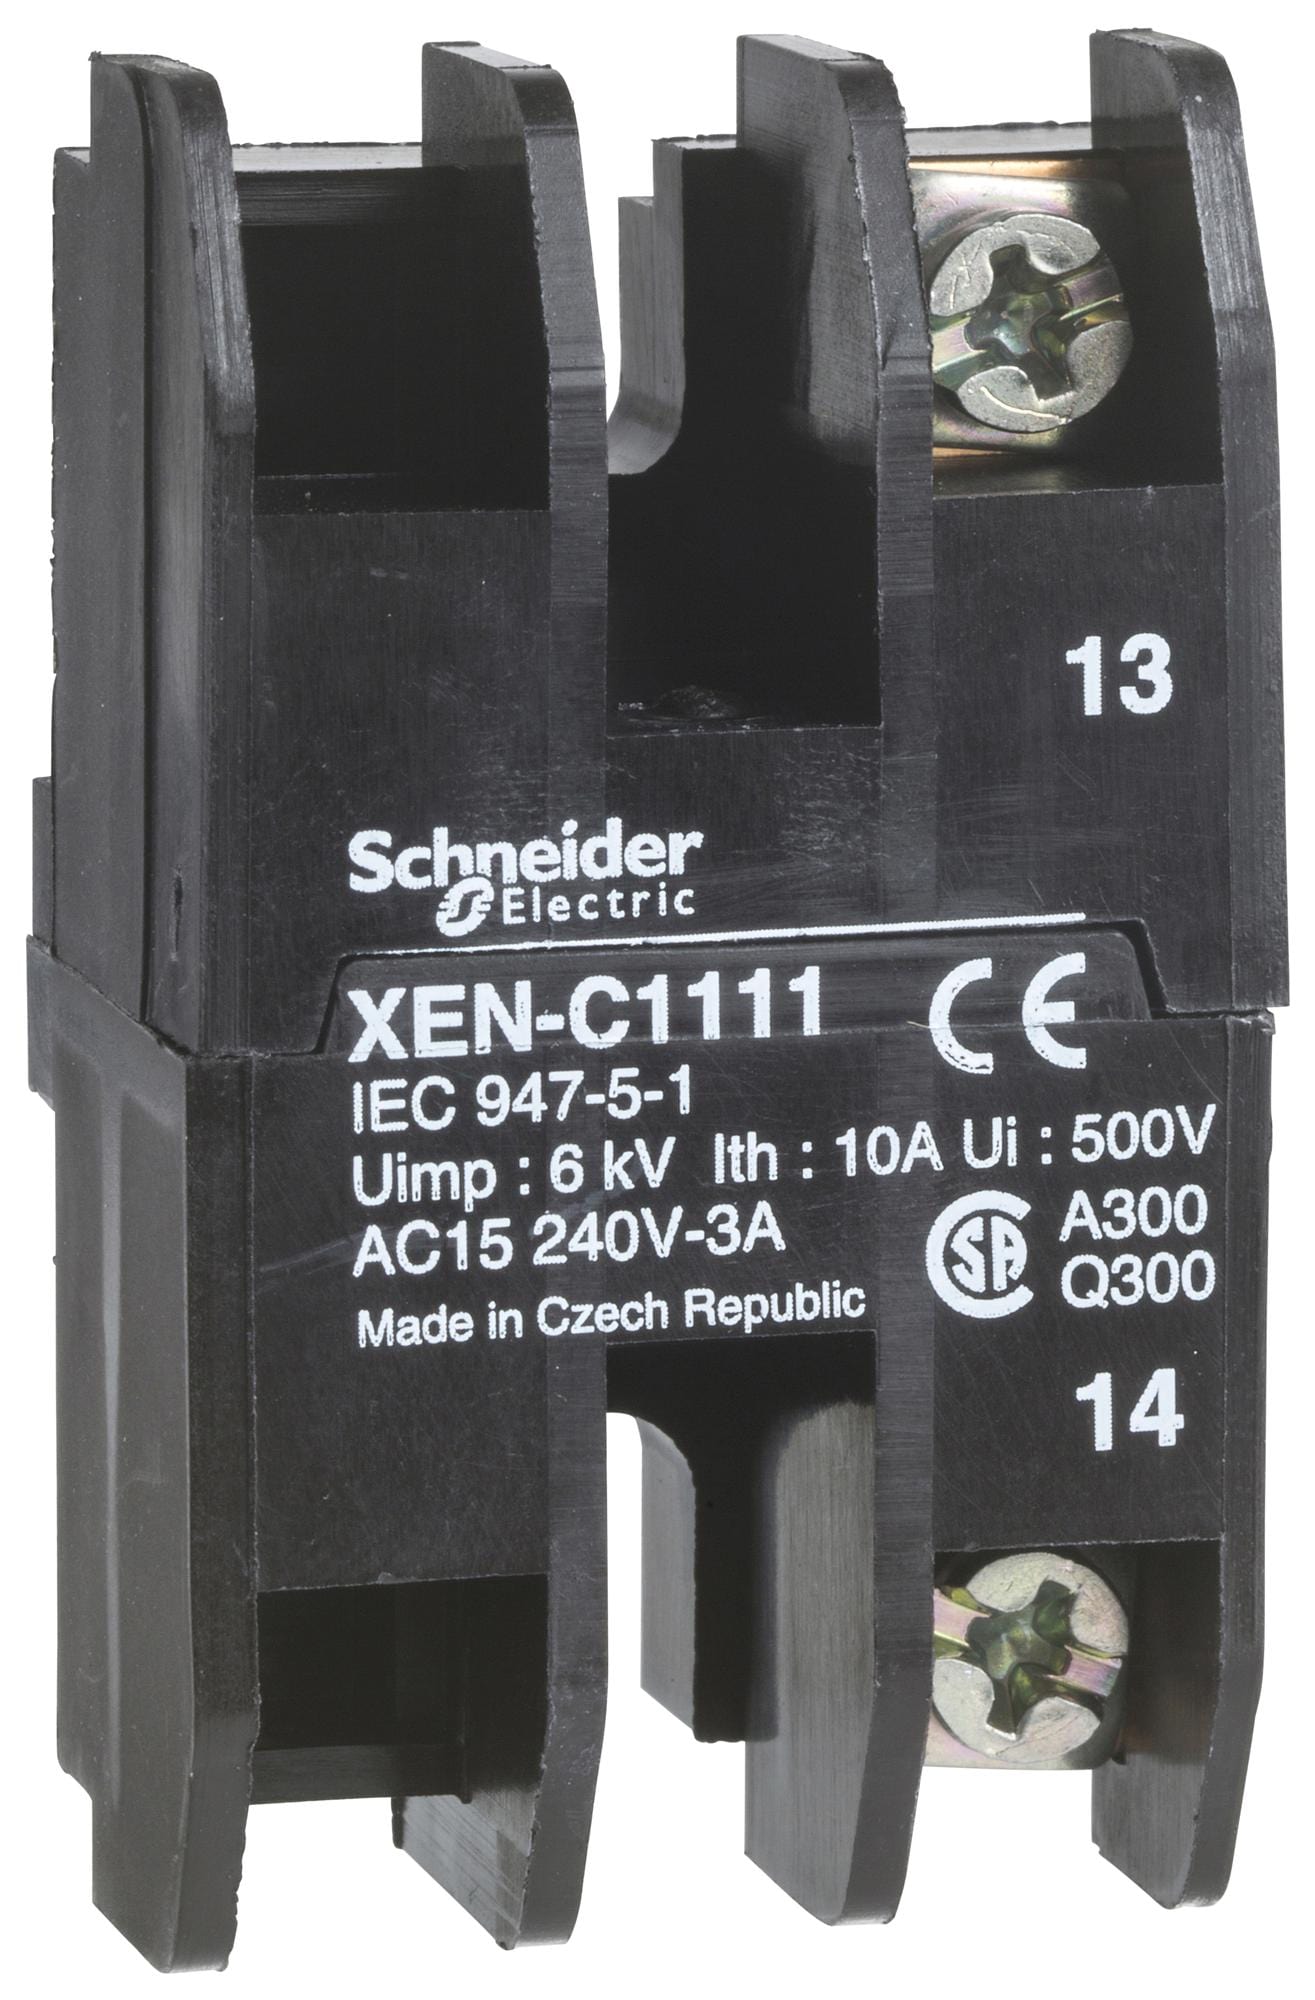 SCHNEIDER ELECTRIC Contact Blocks XENB1491 CONTACT BLOCK, 3A, 240VAC SCREW CLAMP SCHNEIDER ELECTRIC 3114845 XENB1491